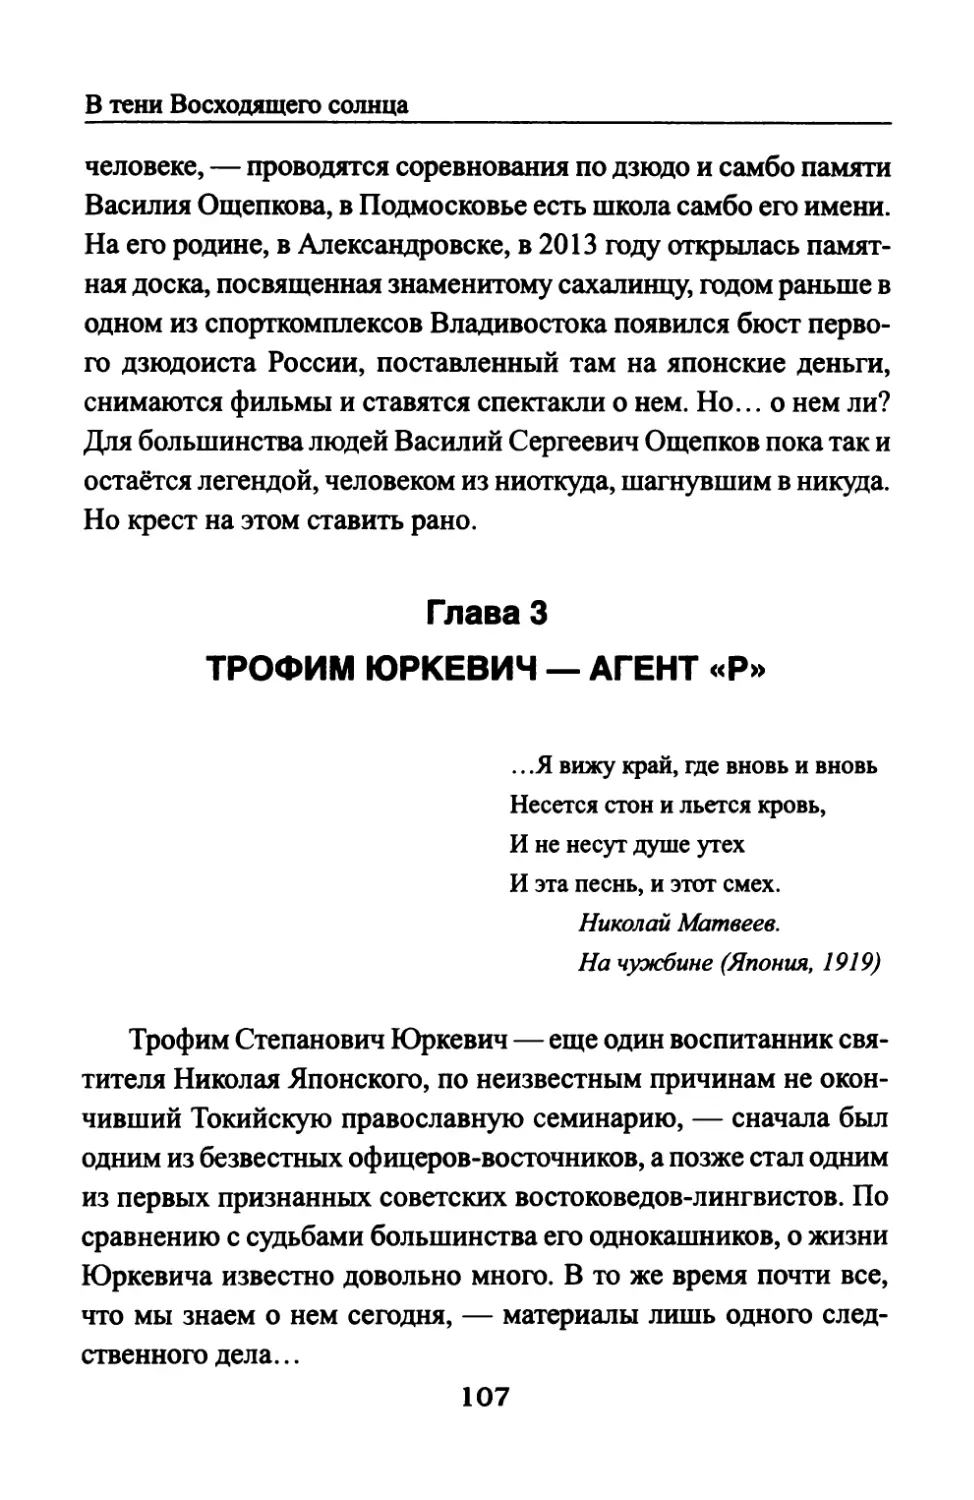 Глава  3.  ТРОФИМ  ЮРКЕВИЧ  —  АГЕНТ  «Р»